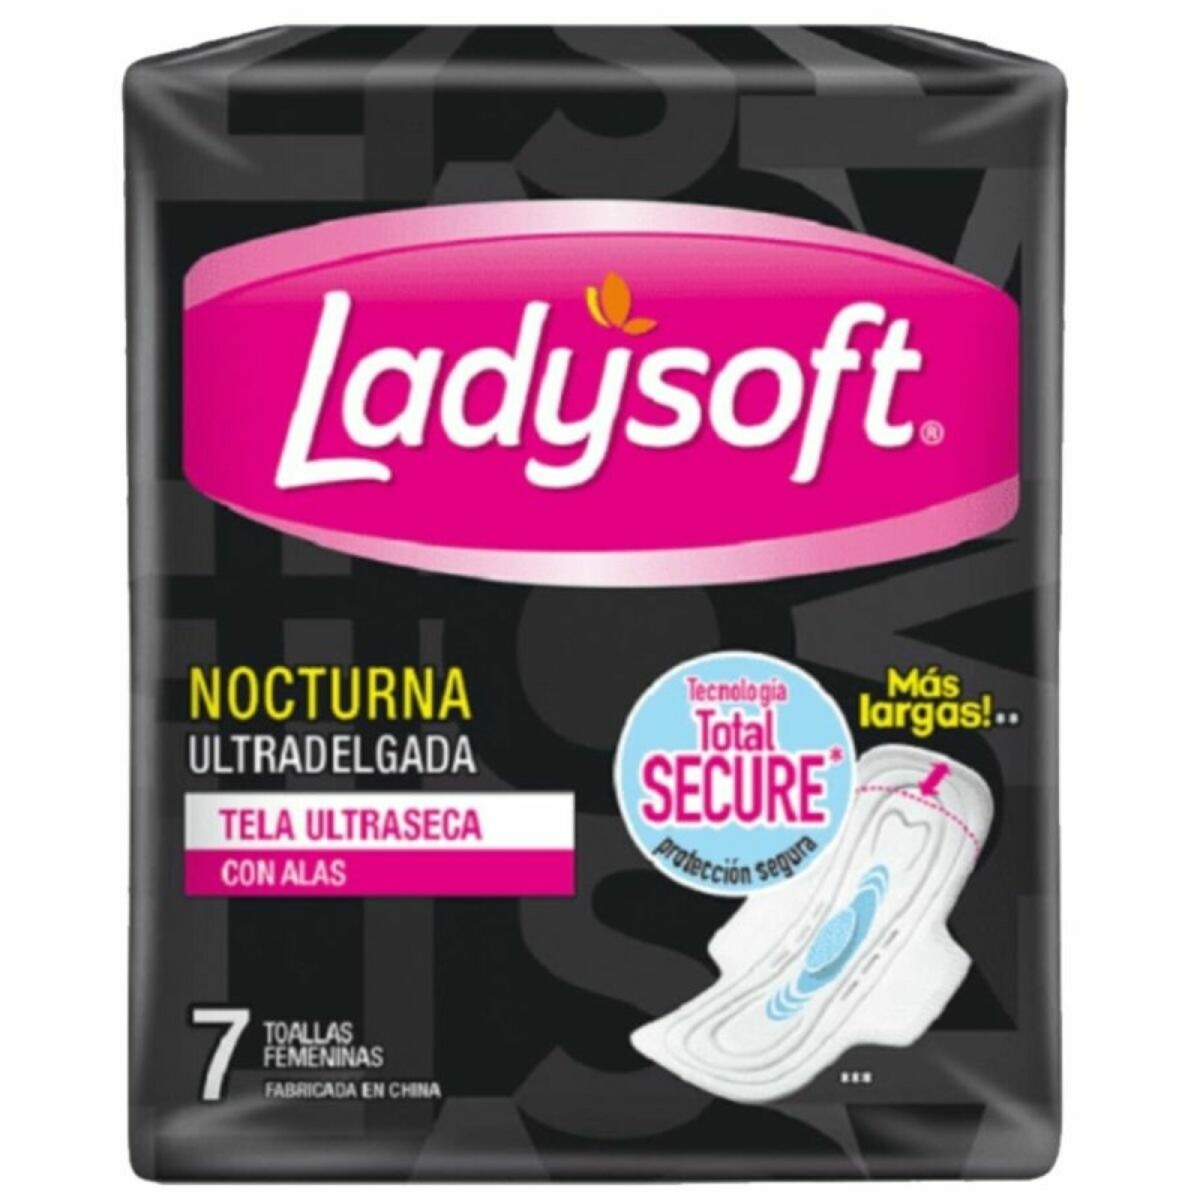 Ladysoft toalla - Nocturna ultradelgada x7 